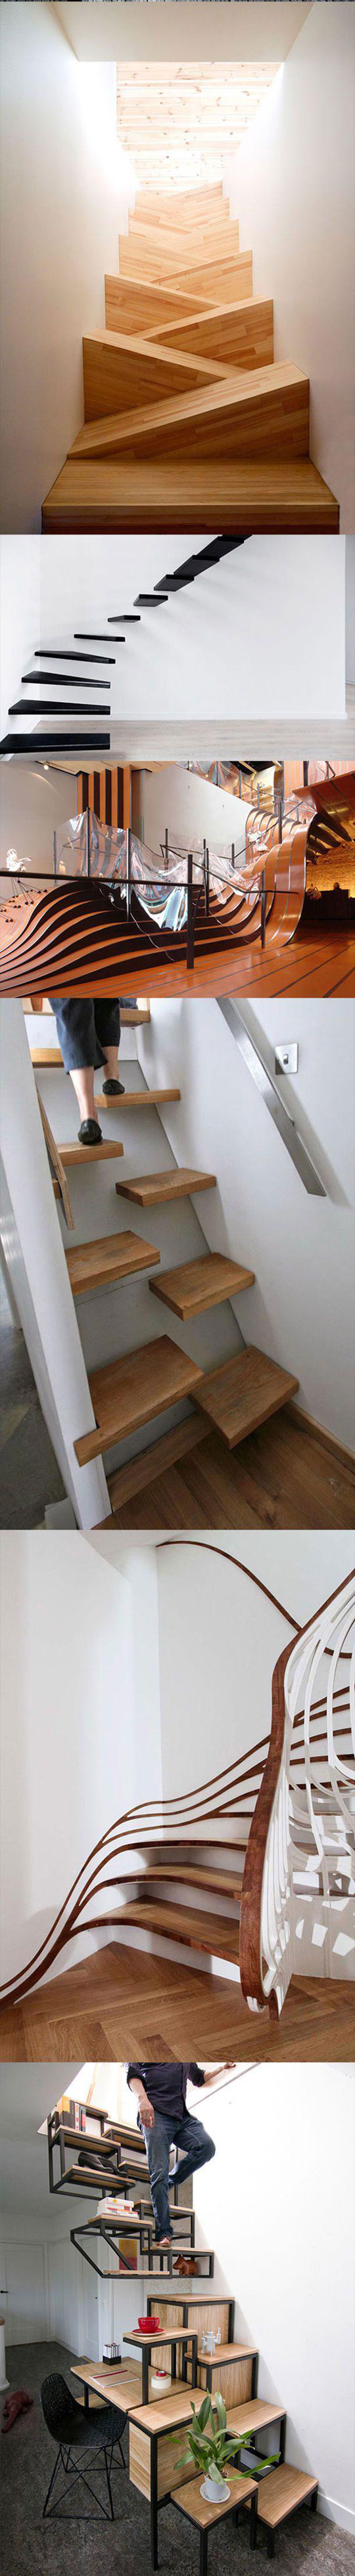 cool-stairs-innovative-prototype.jpg